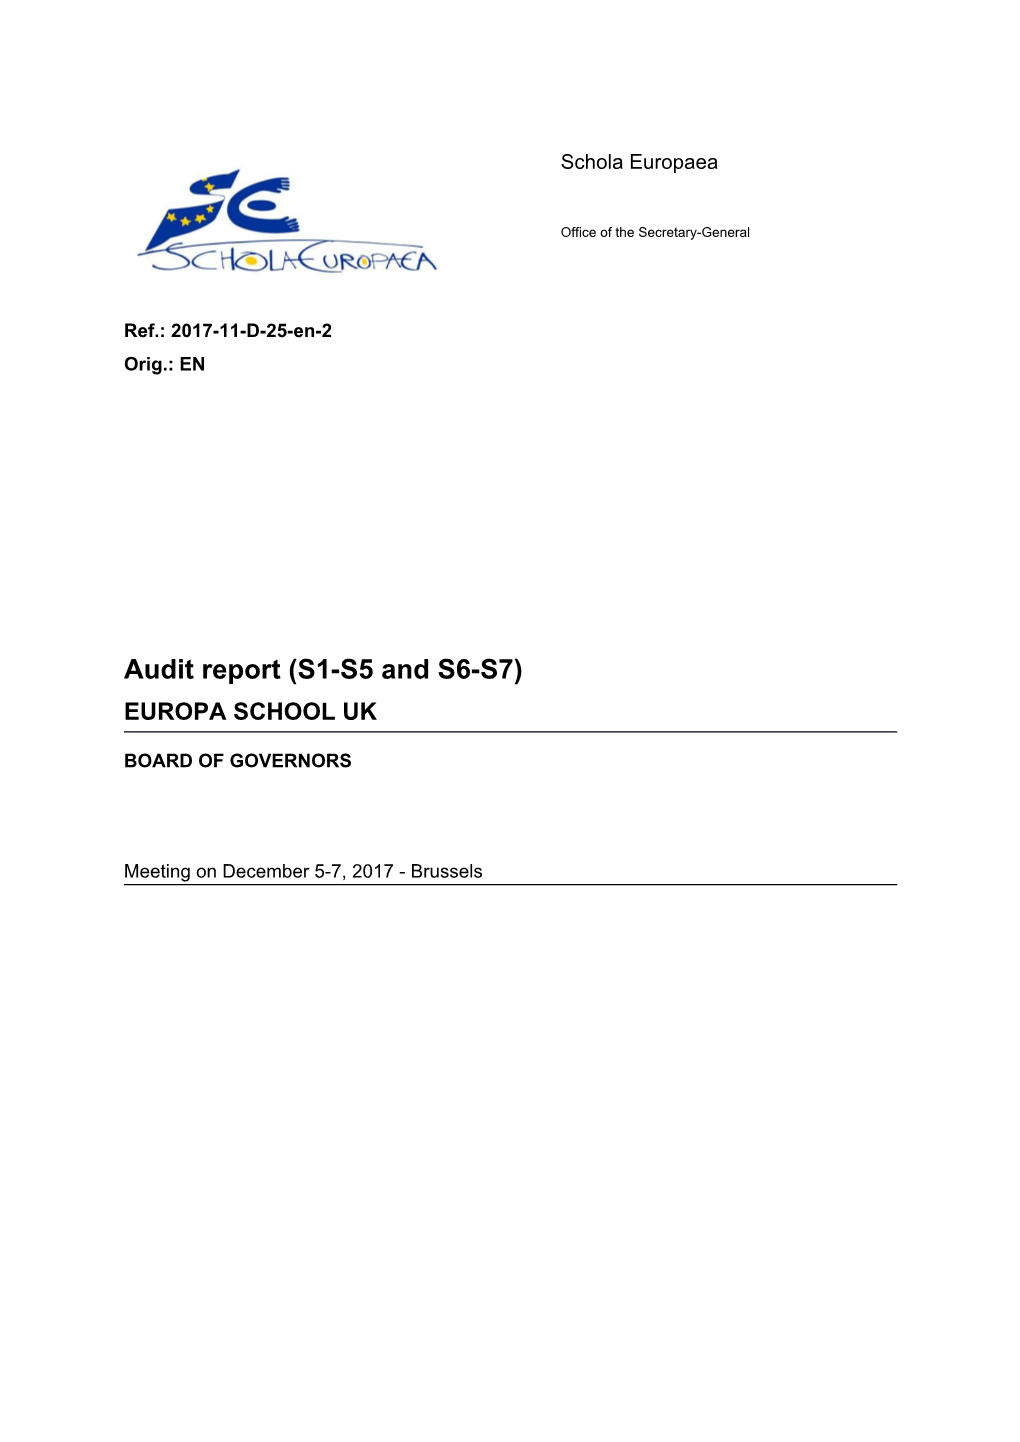 Audit Report (S1-S5 and S6-S7) EUROPA SCHOOL UK